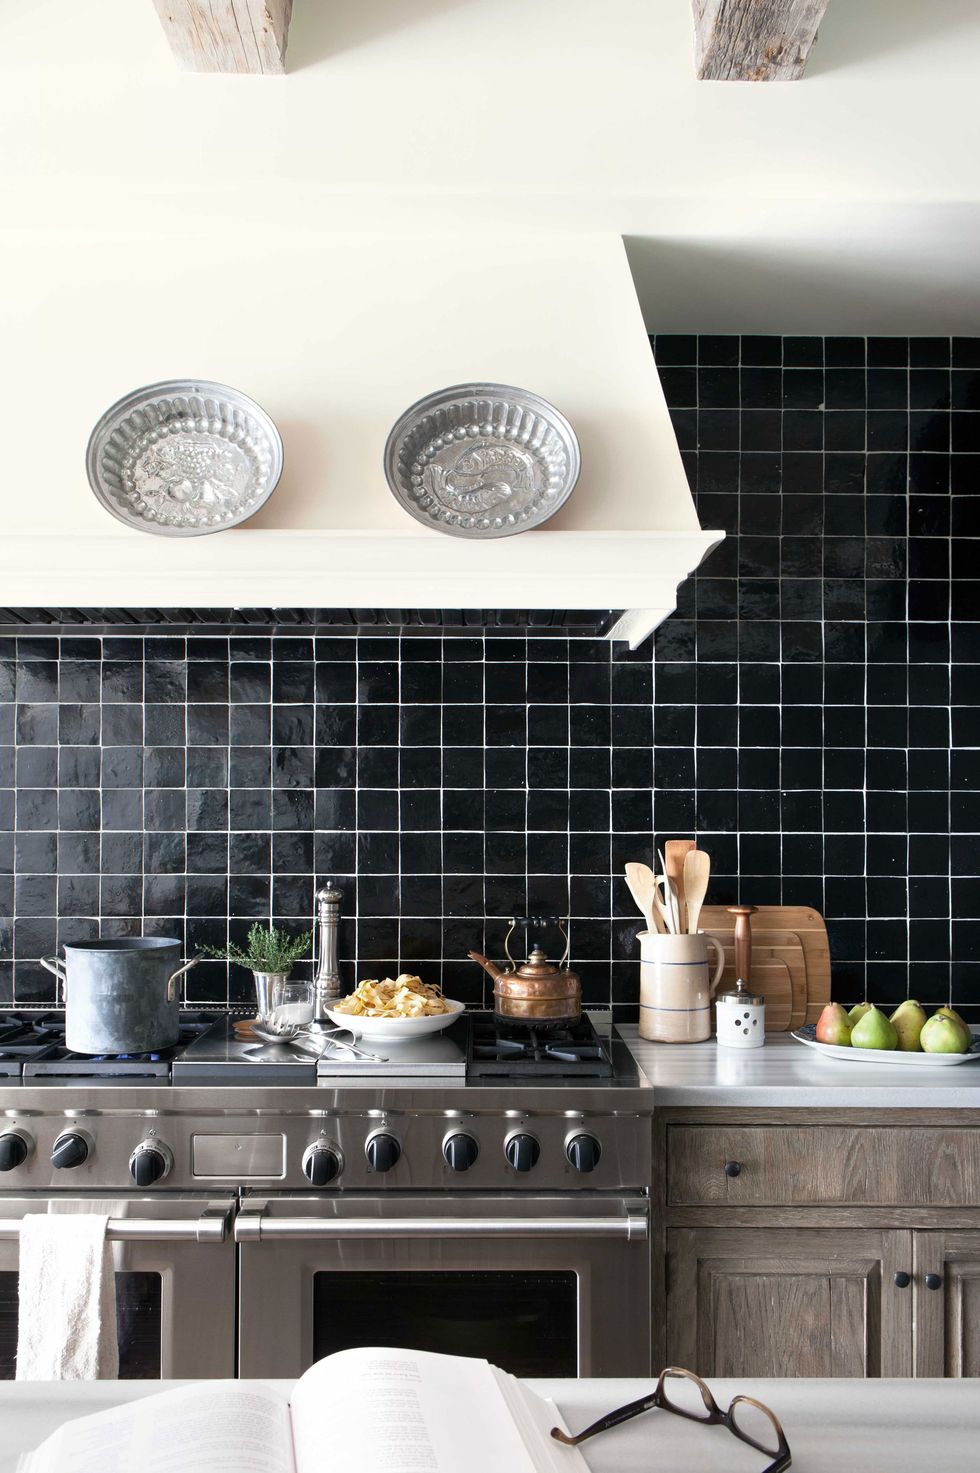 Black and silver kitchen designs 